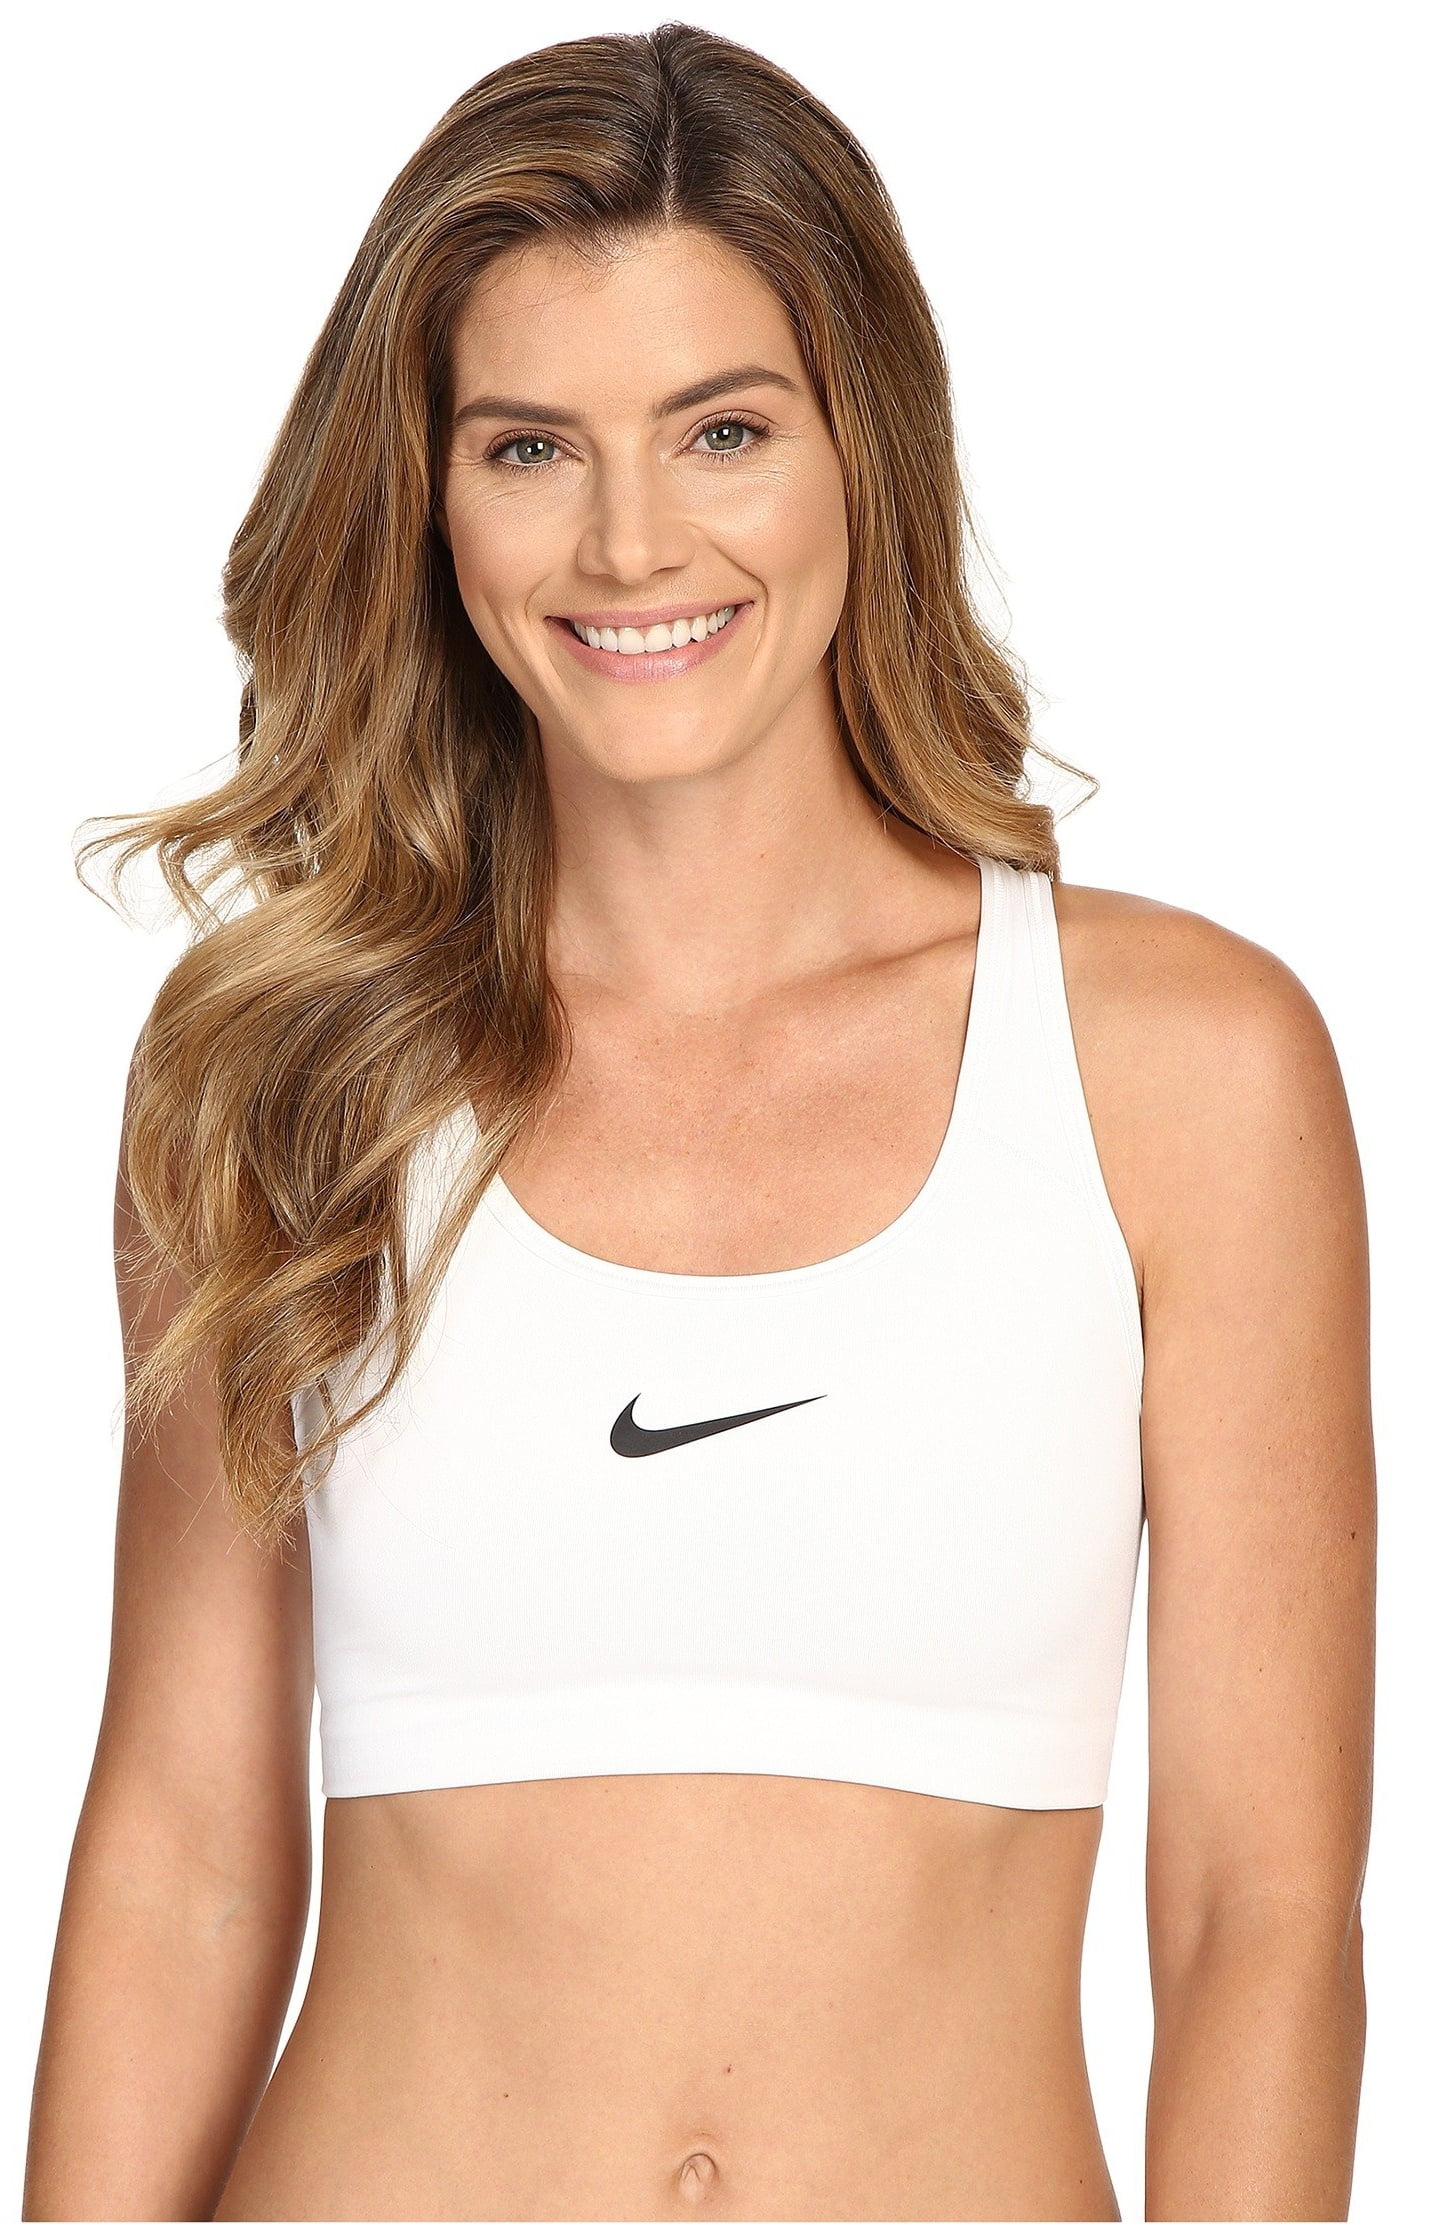 Nike 842398-100: Women's Swoosh White Sports Bra (L, White/Black)